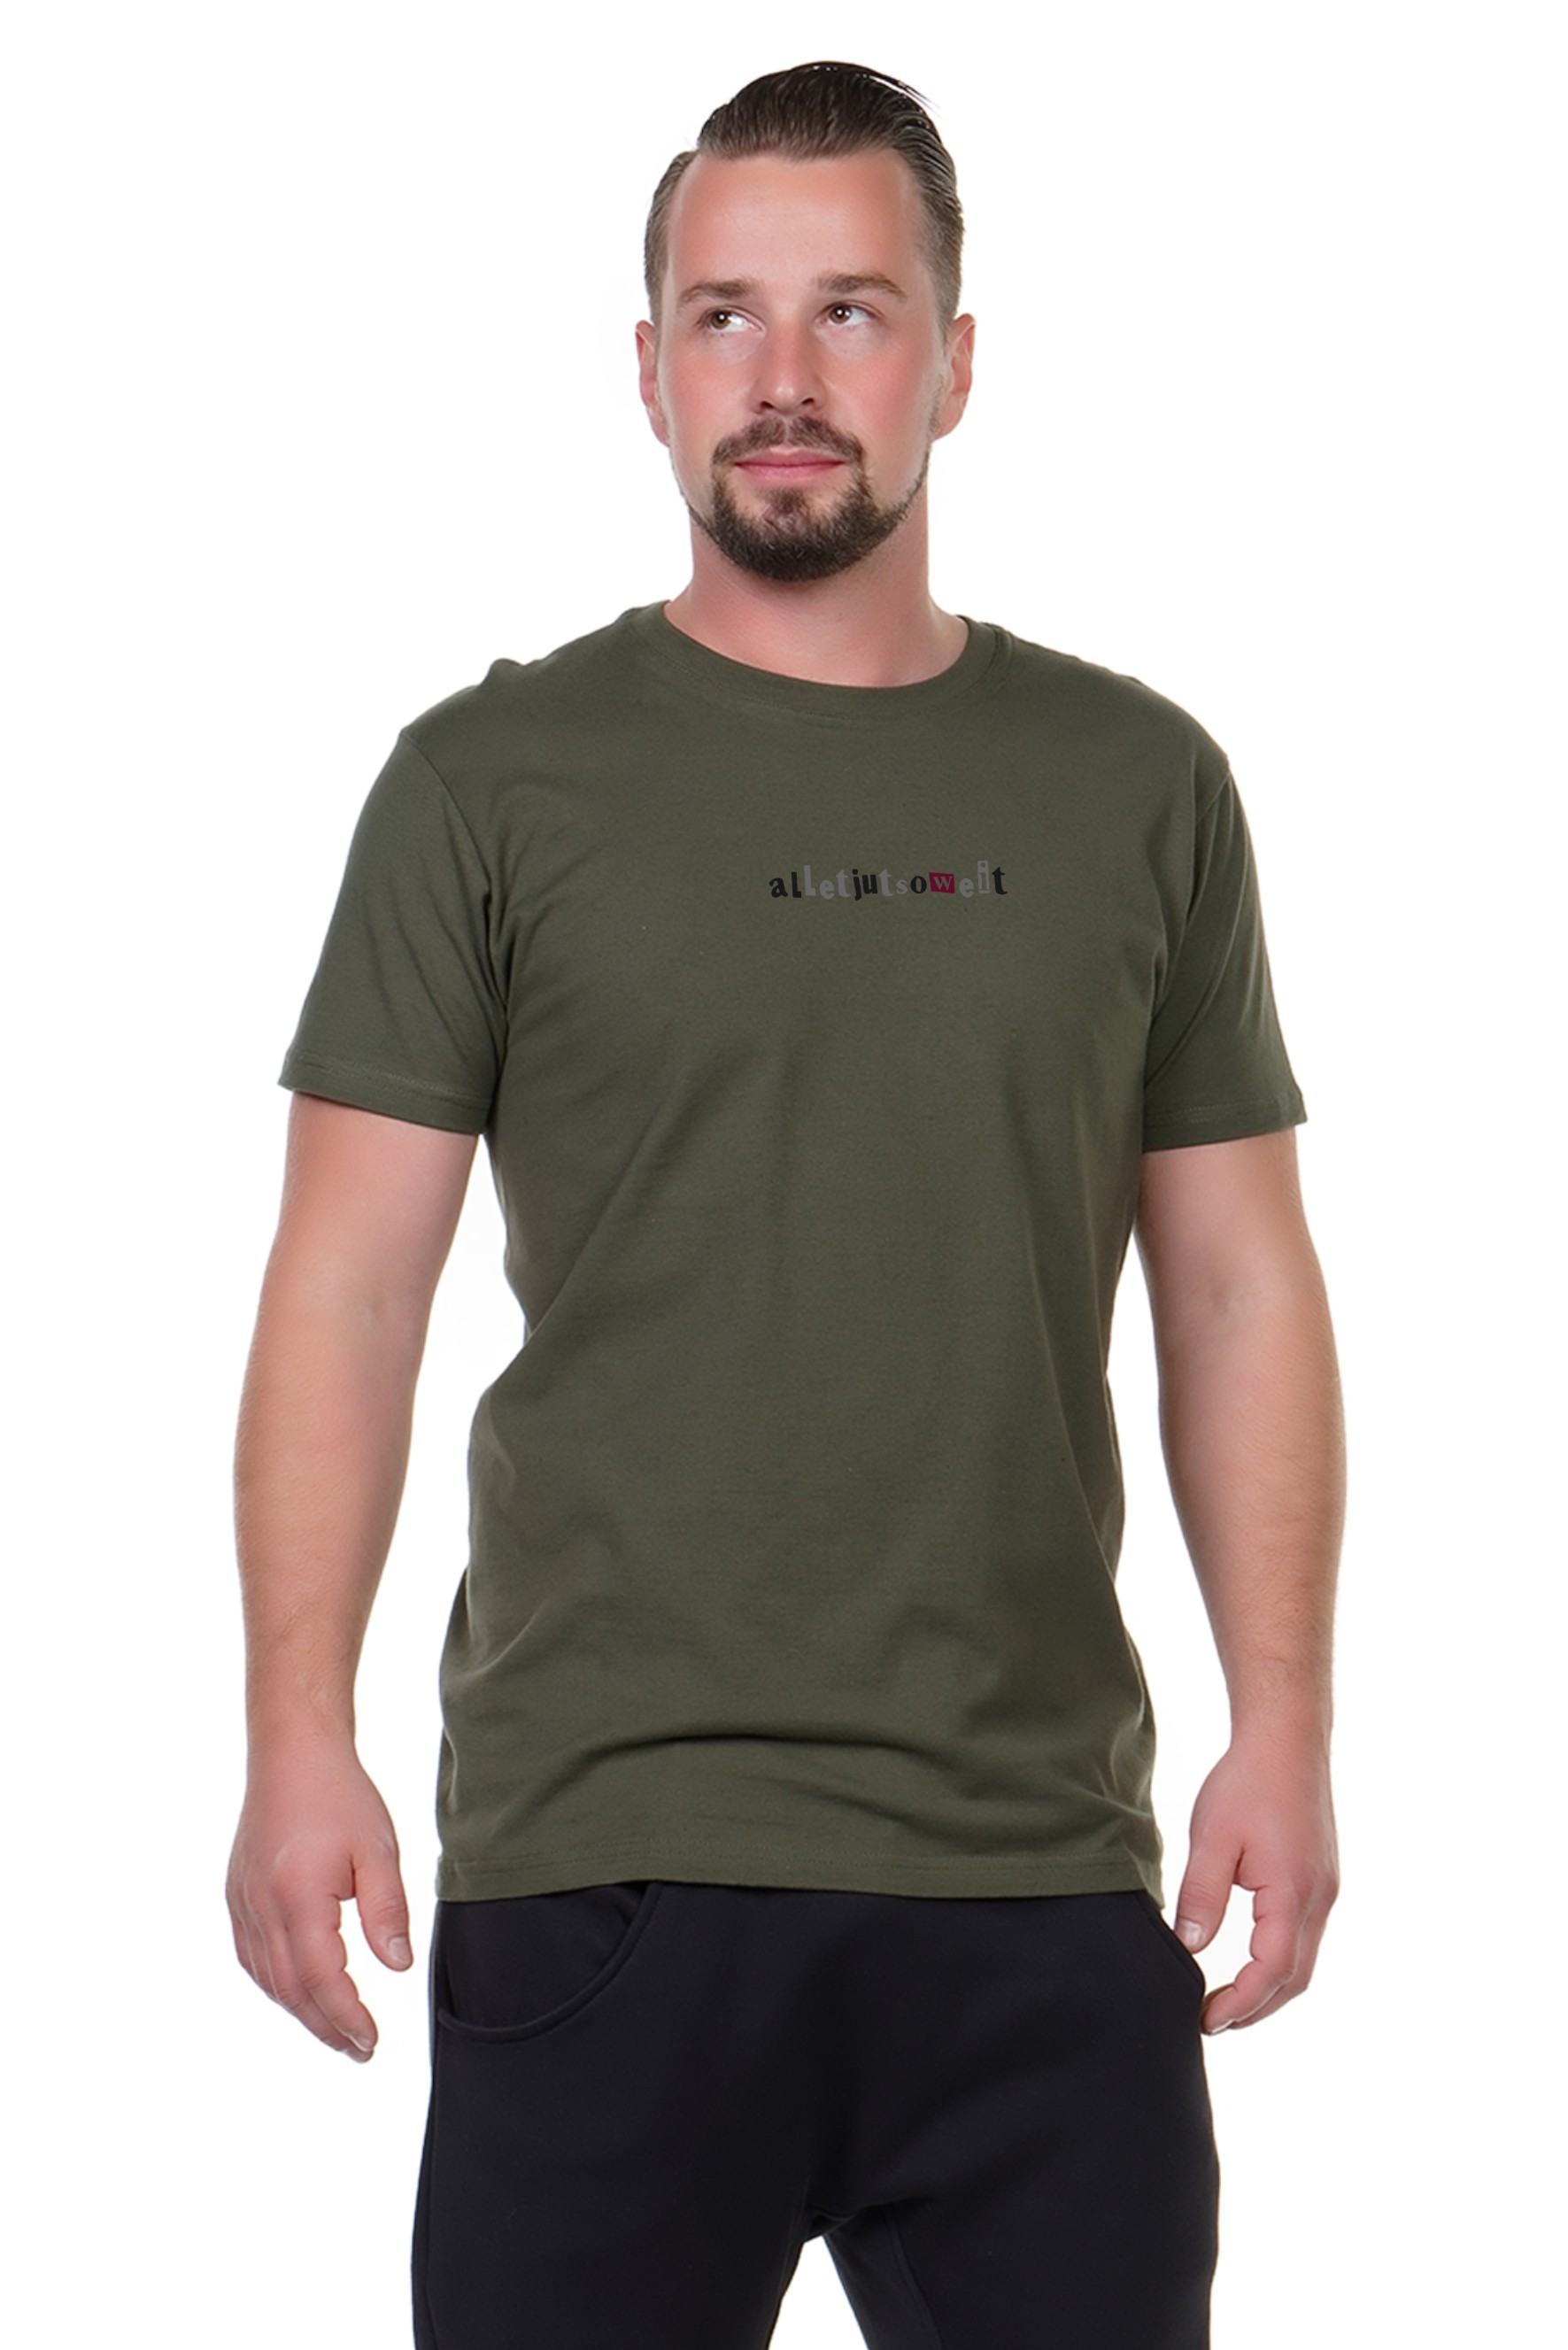  Spree Shirt Männer Allet jut soweit oliv